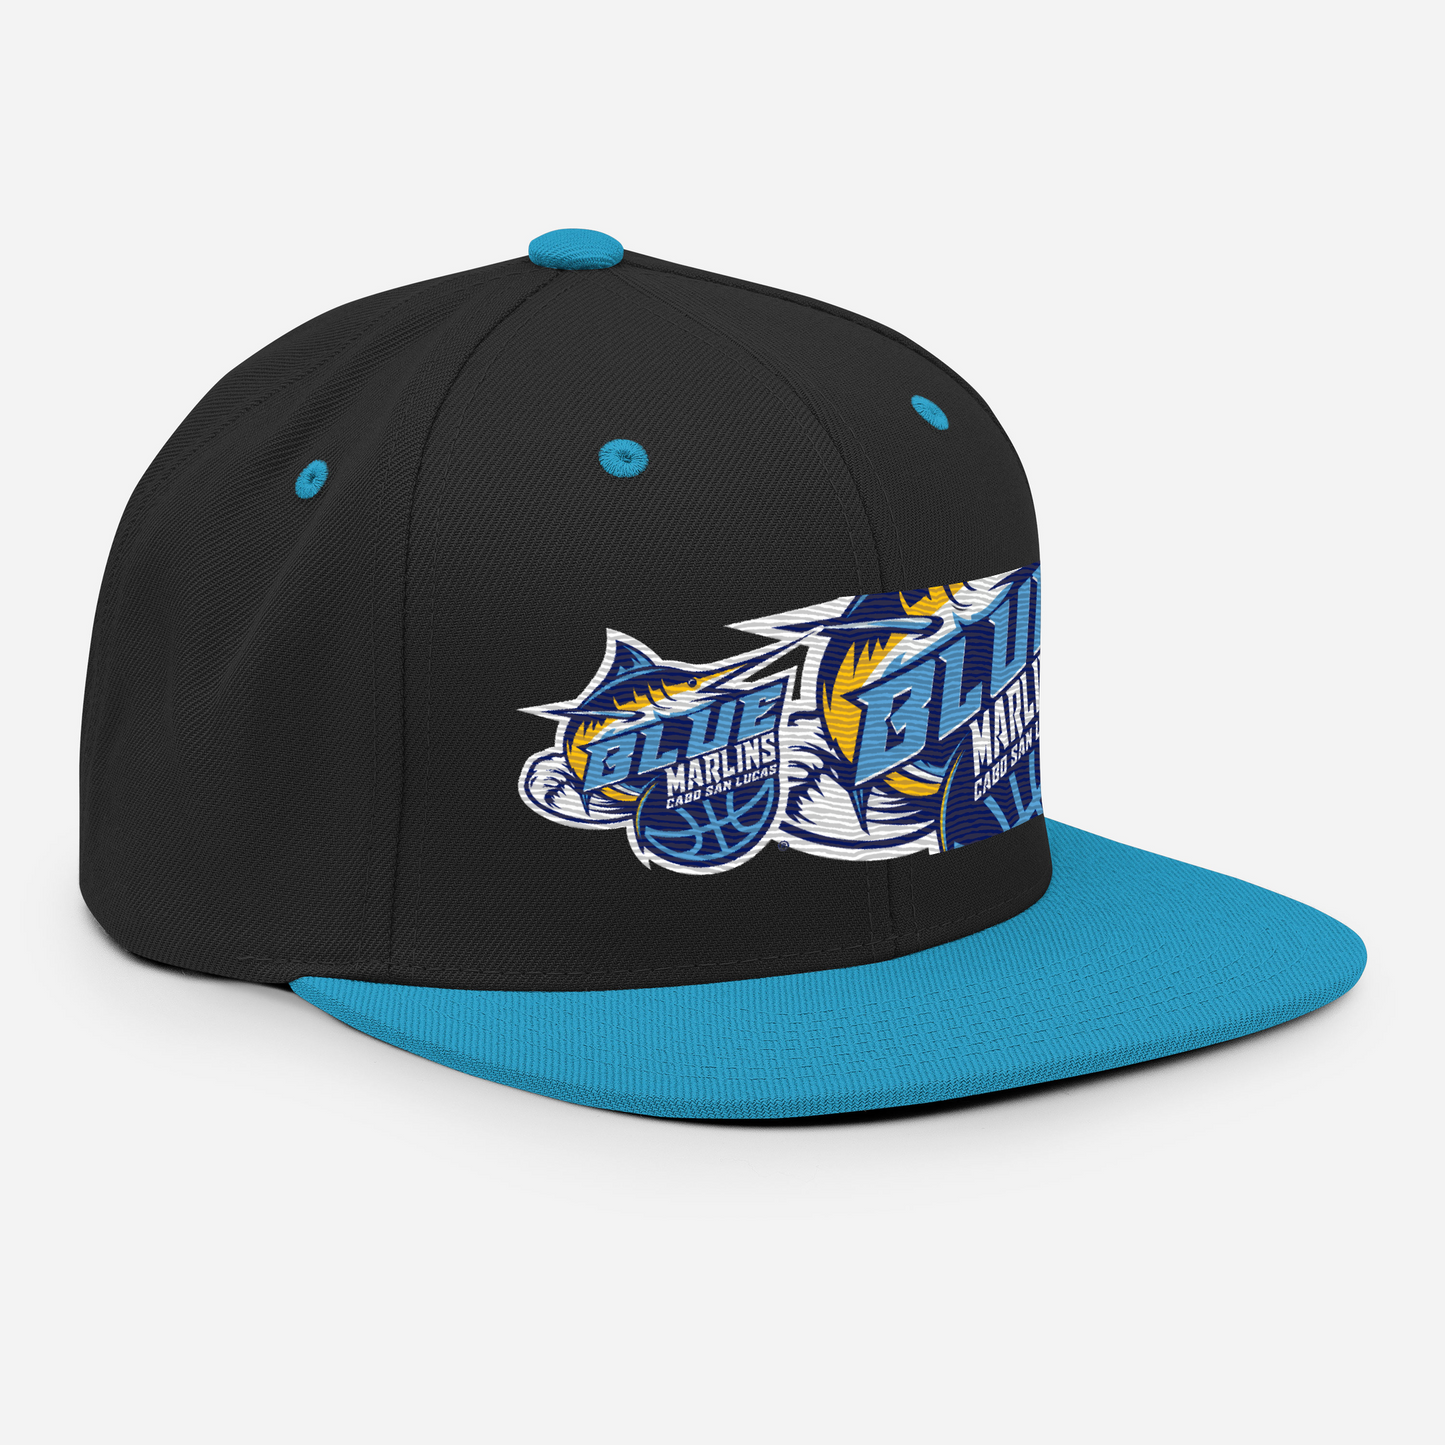 The Blue' Blue Marlins Team Hat